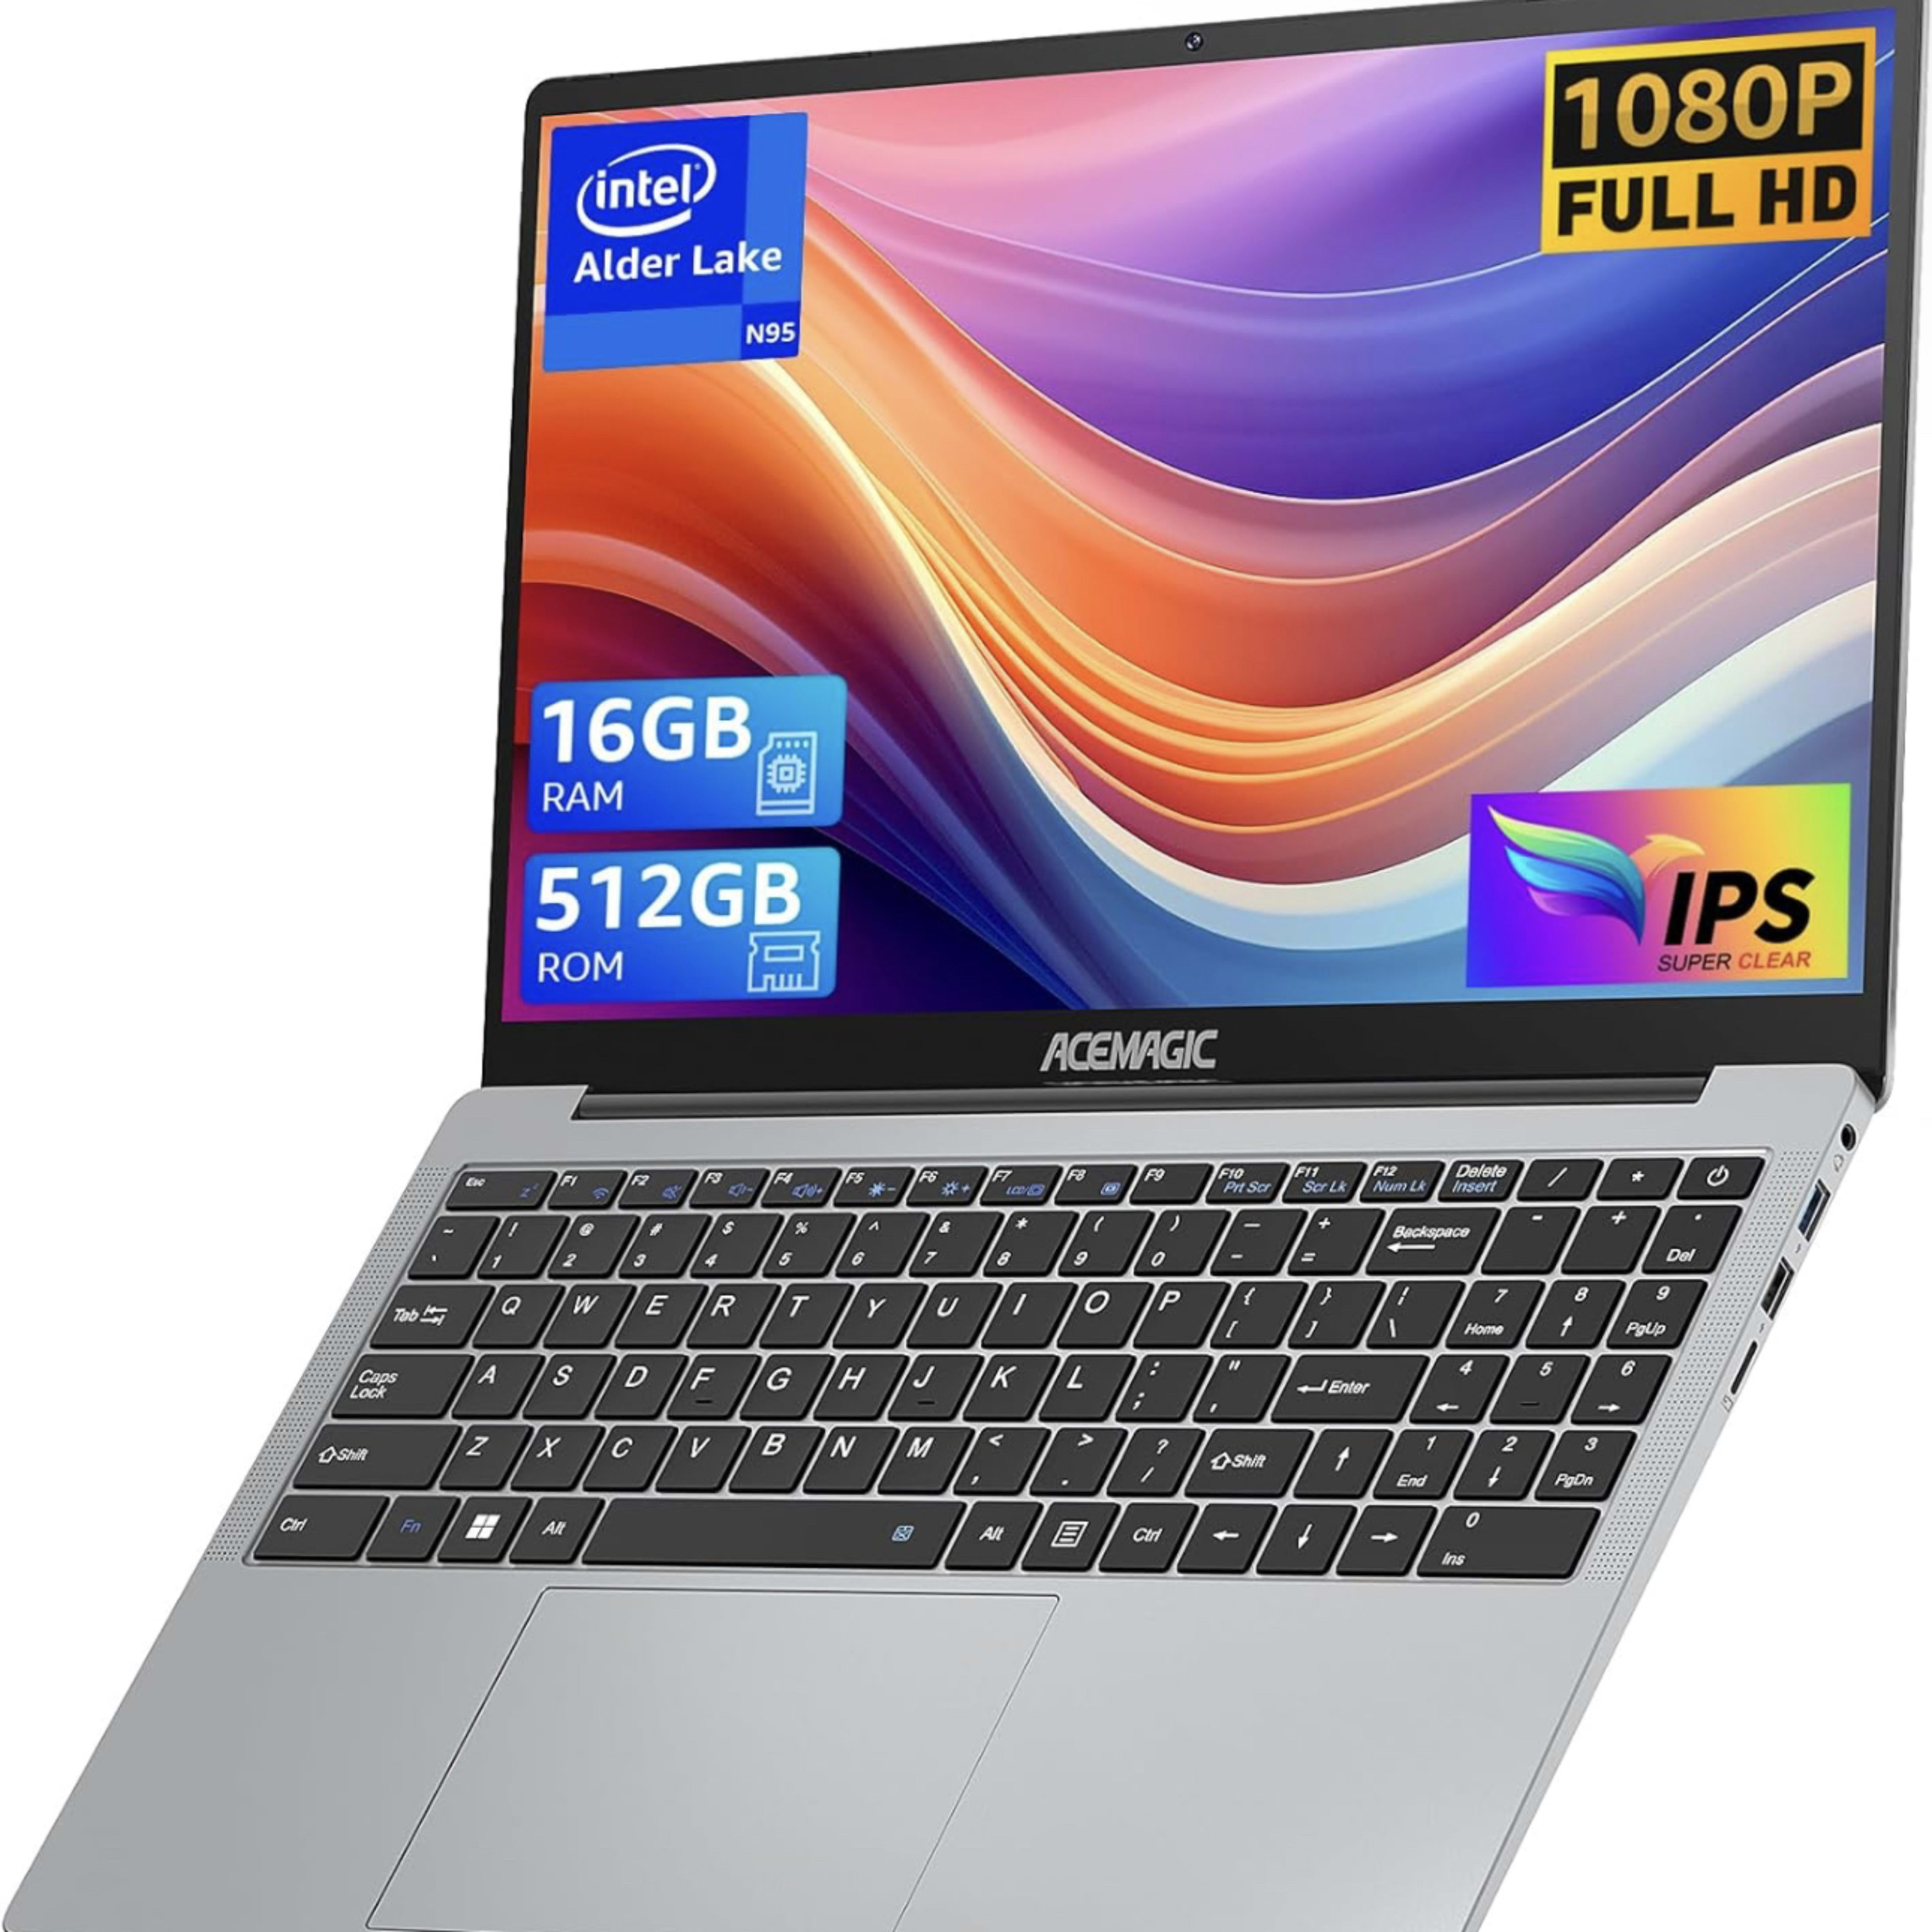 Laptop 15.6 FHD 16GB DDR4 512GB SSD, Intel Quad-Core 12th Alder Lake N95(Up to 3.4GHz)